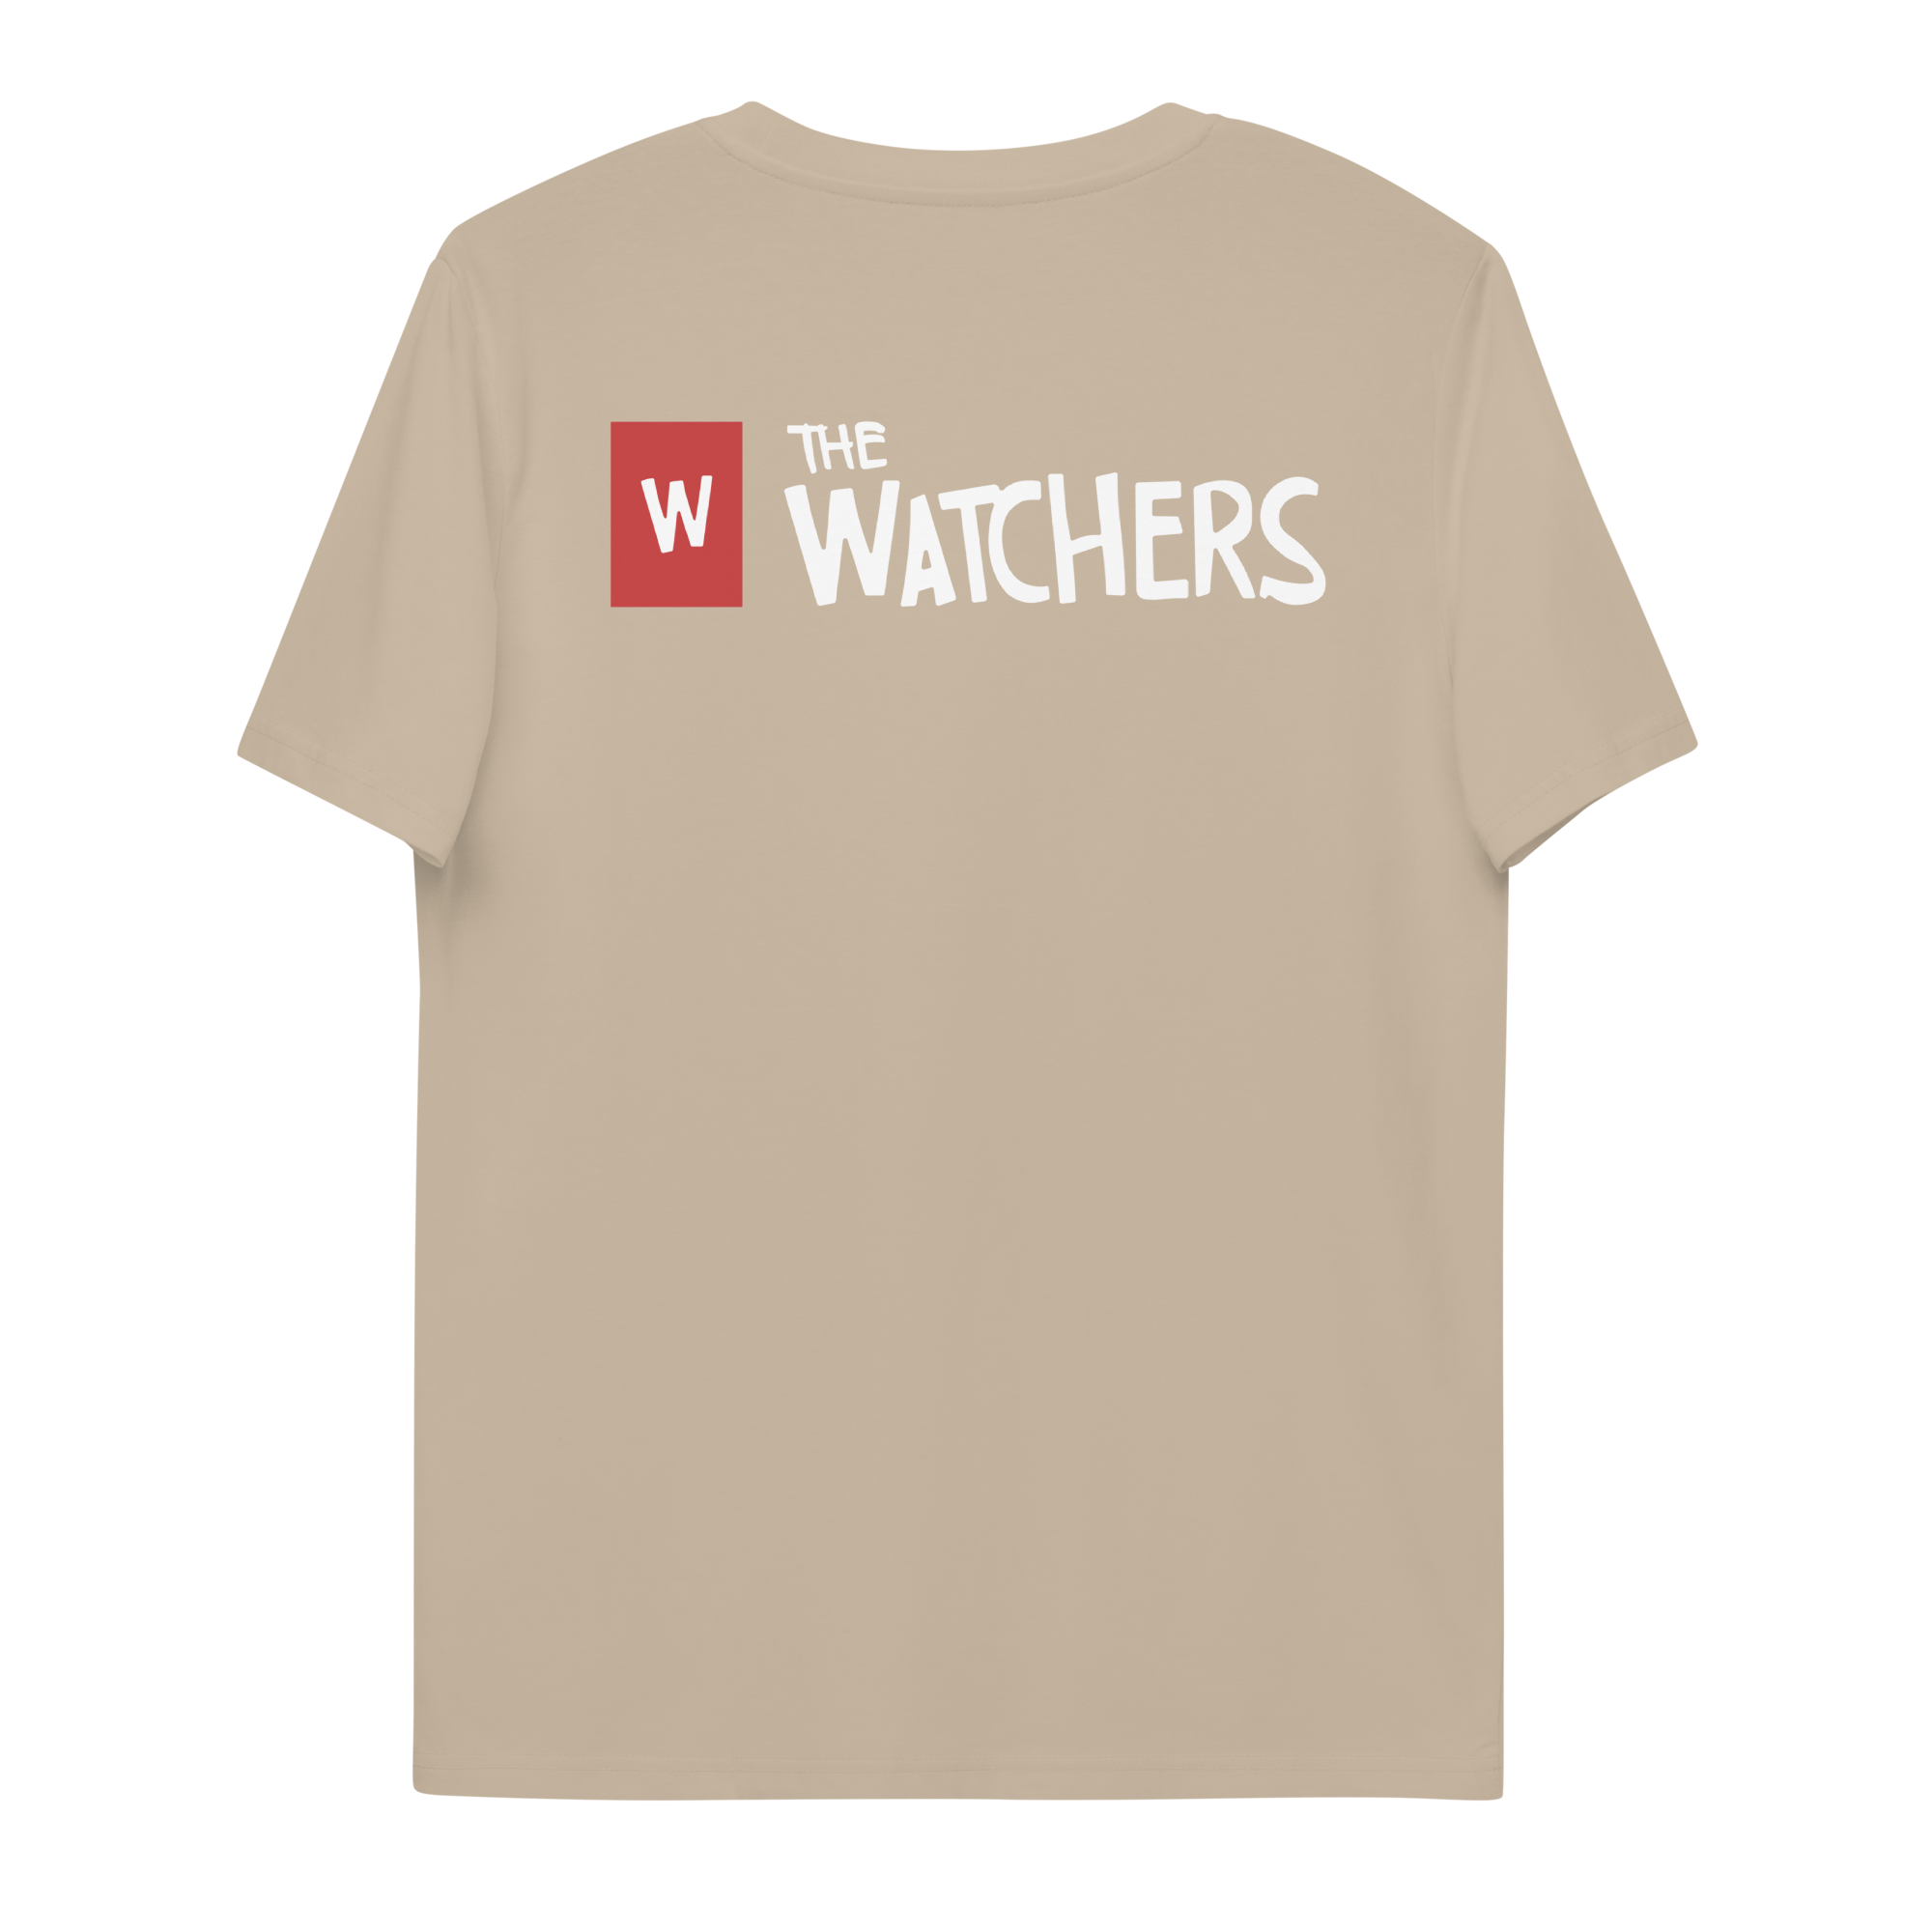 Watchers unisex organic cotton t-shirt